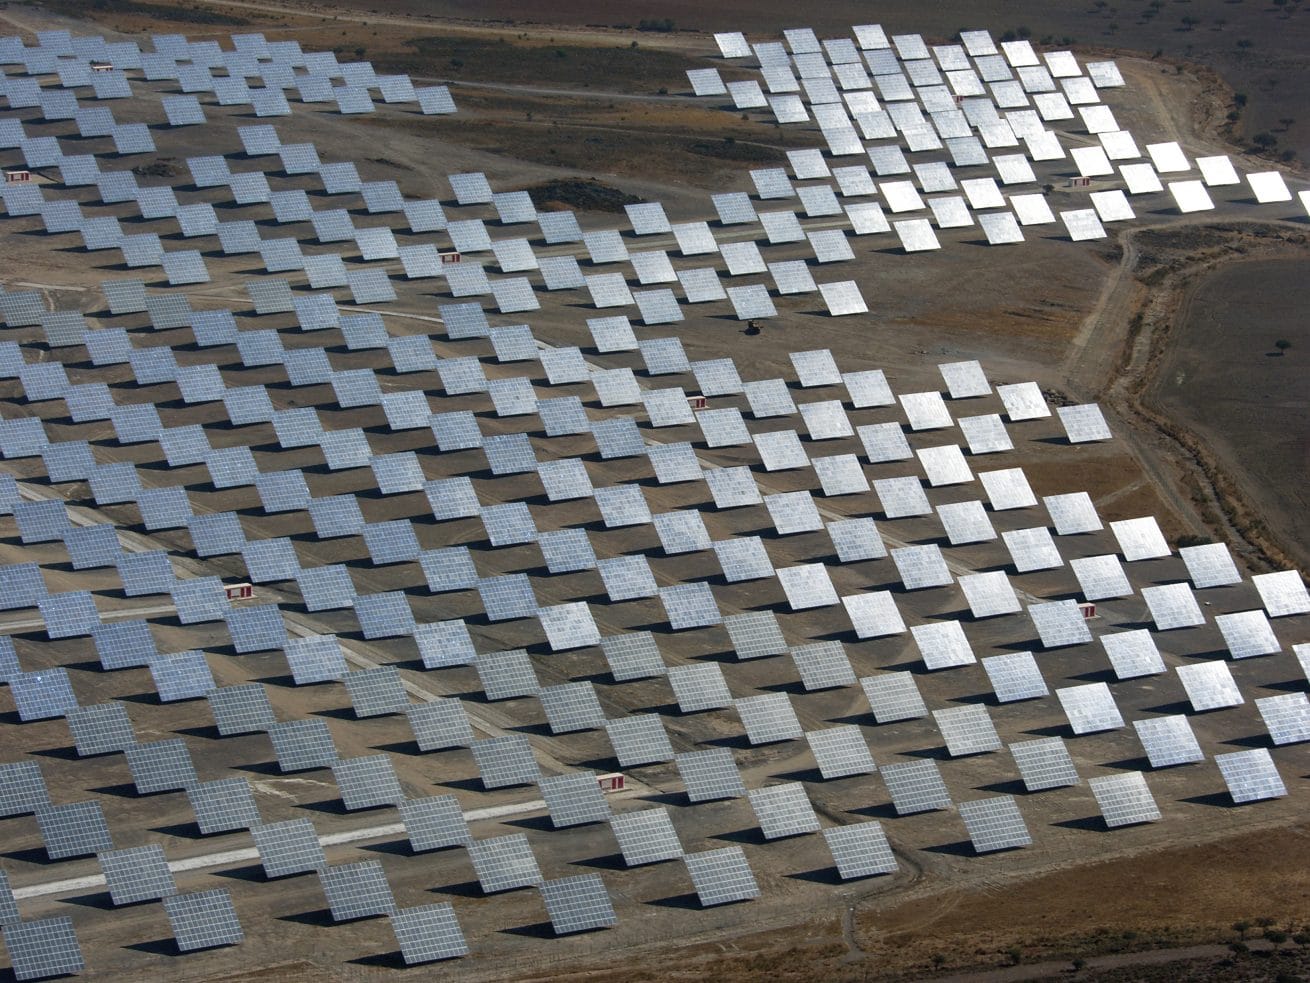 Central Fotovoltaica de Moura